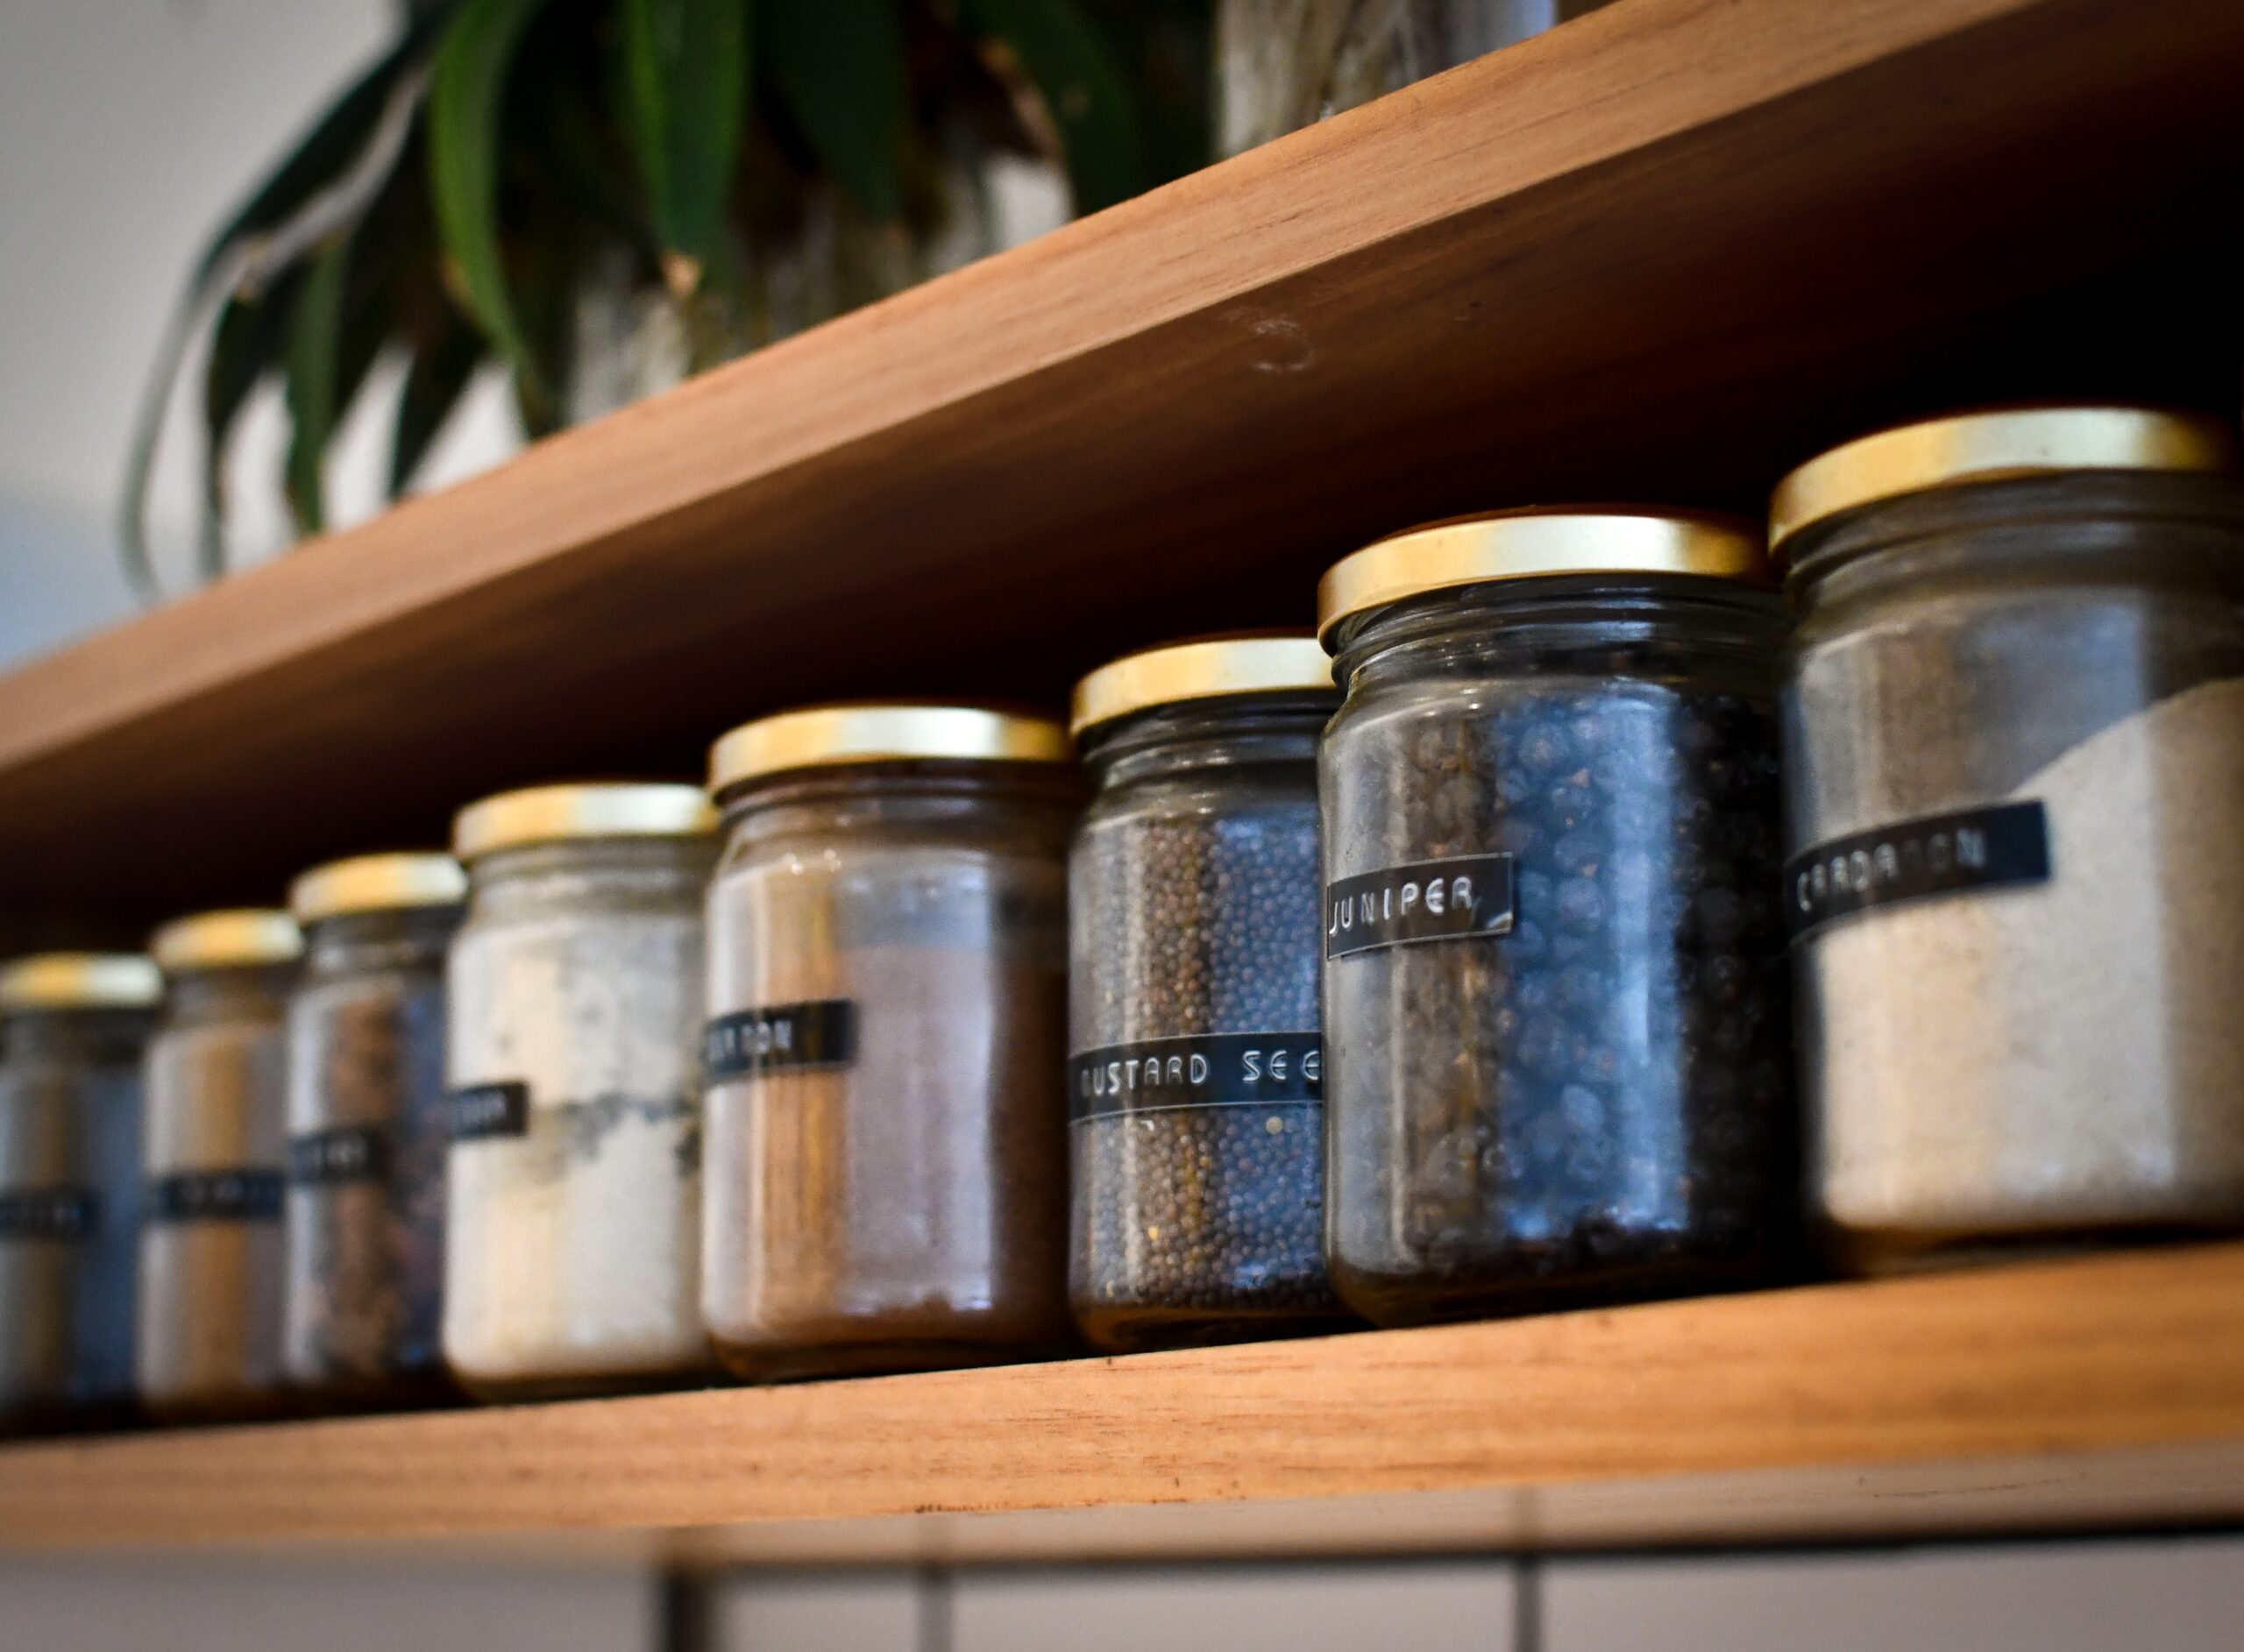 An assortment of spice jars on a shelf